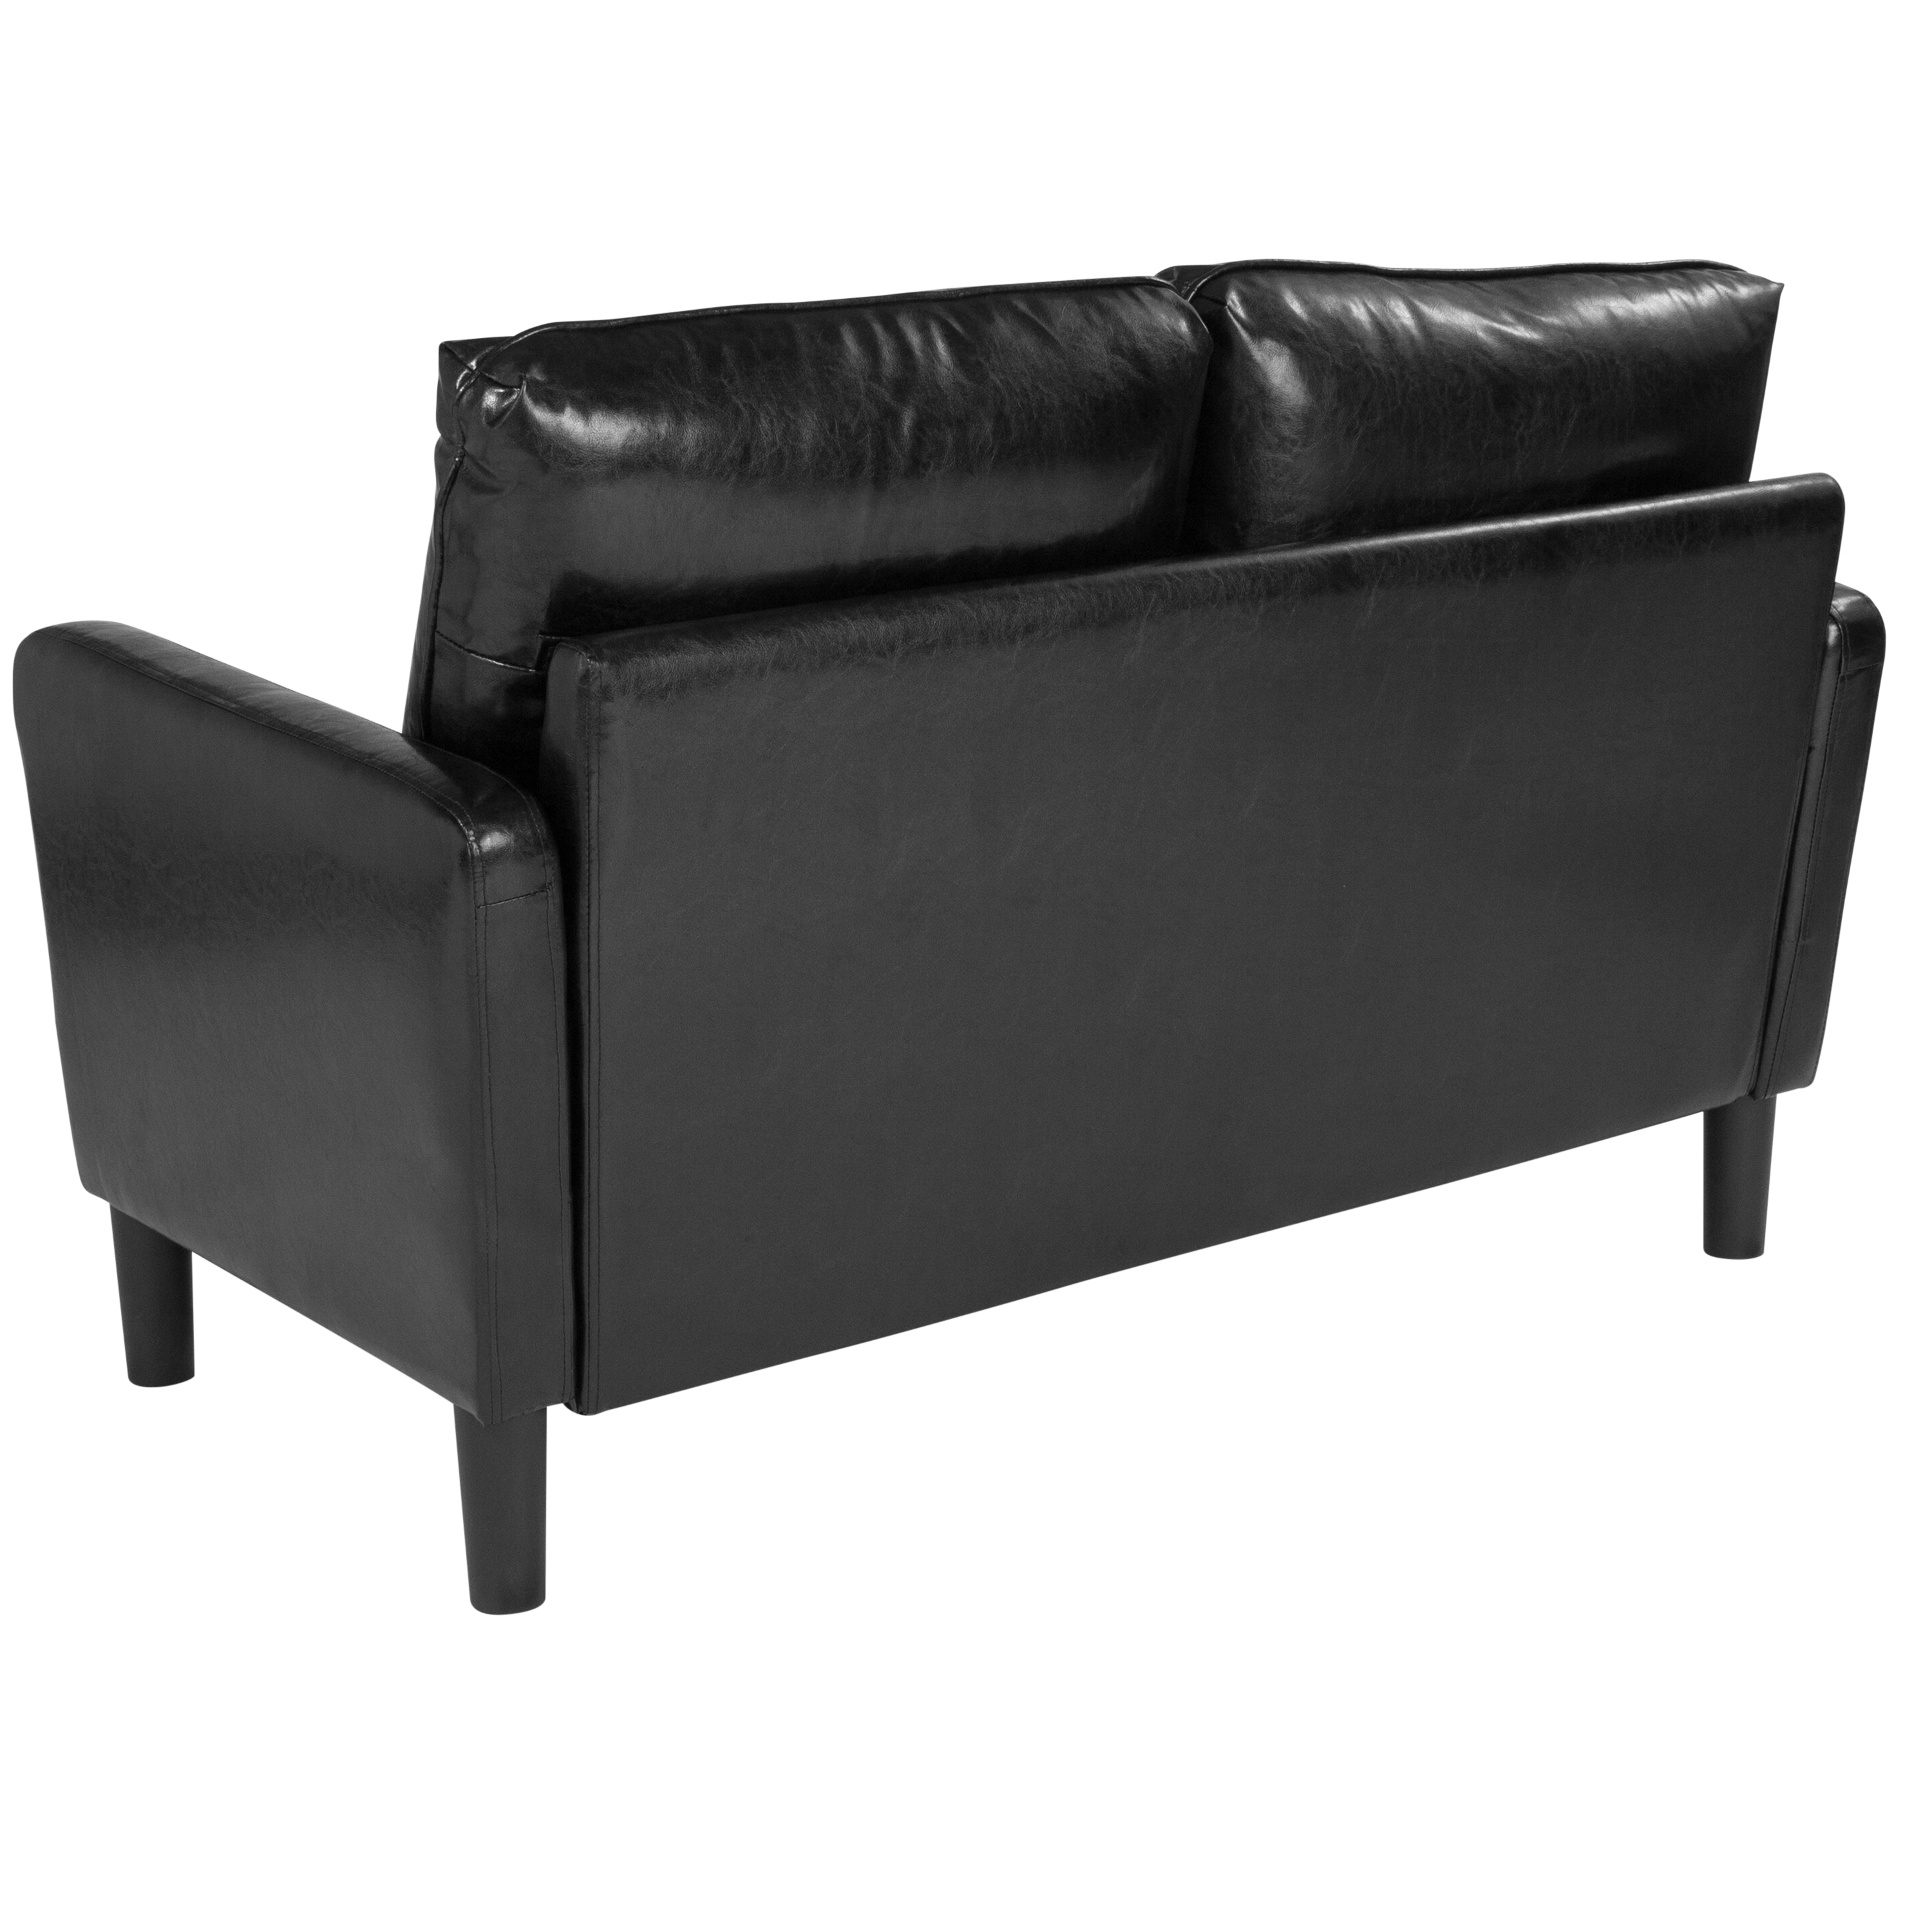 Flash Furniture Washington Park Upholstered Loveseat in Black LeatherSoft - image 3 of 5